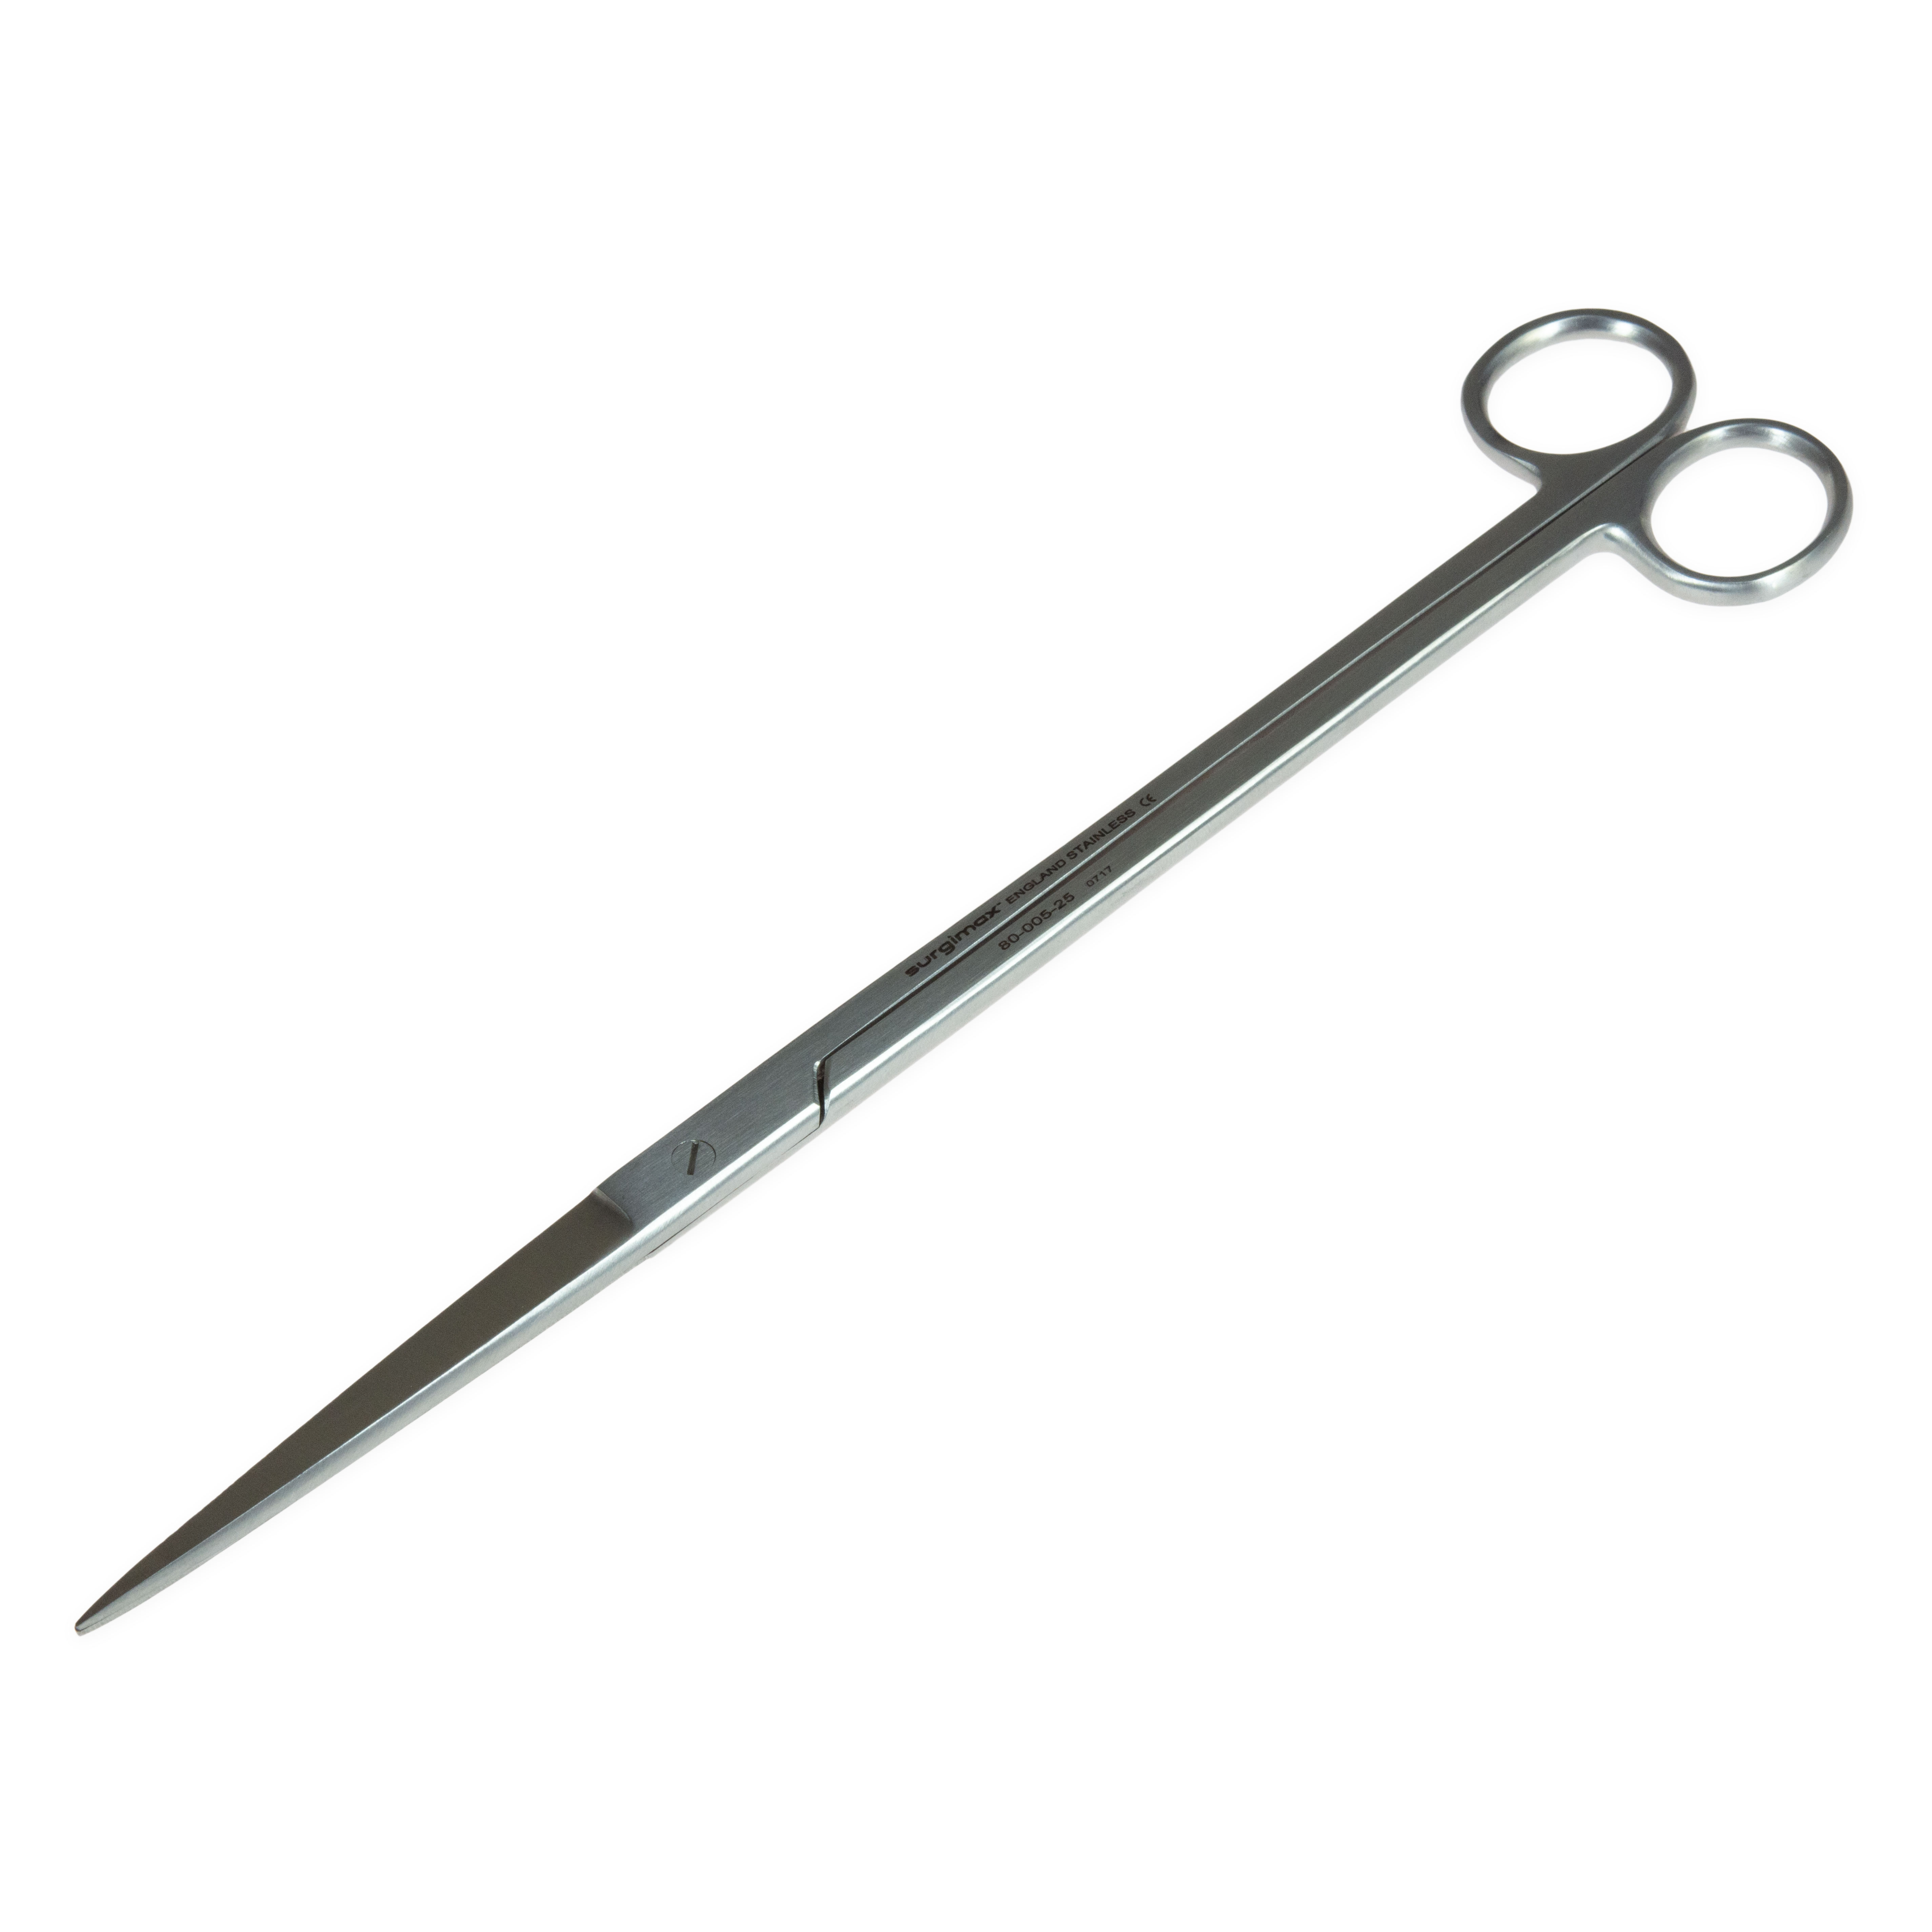 Most versatile scissors 25 cm long